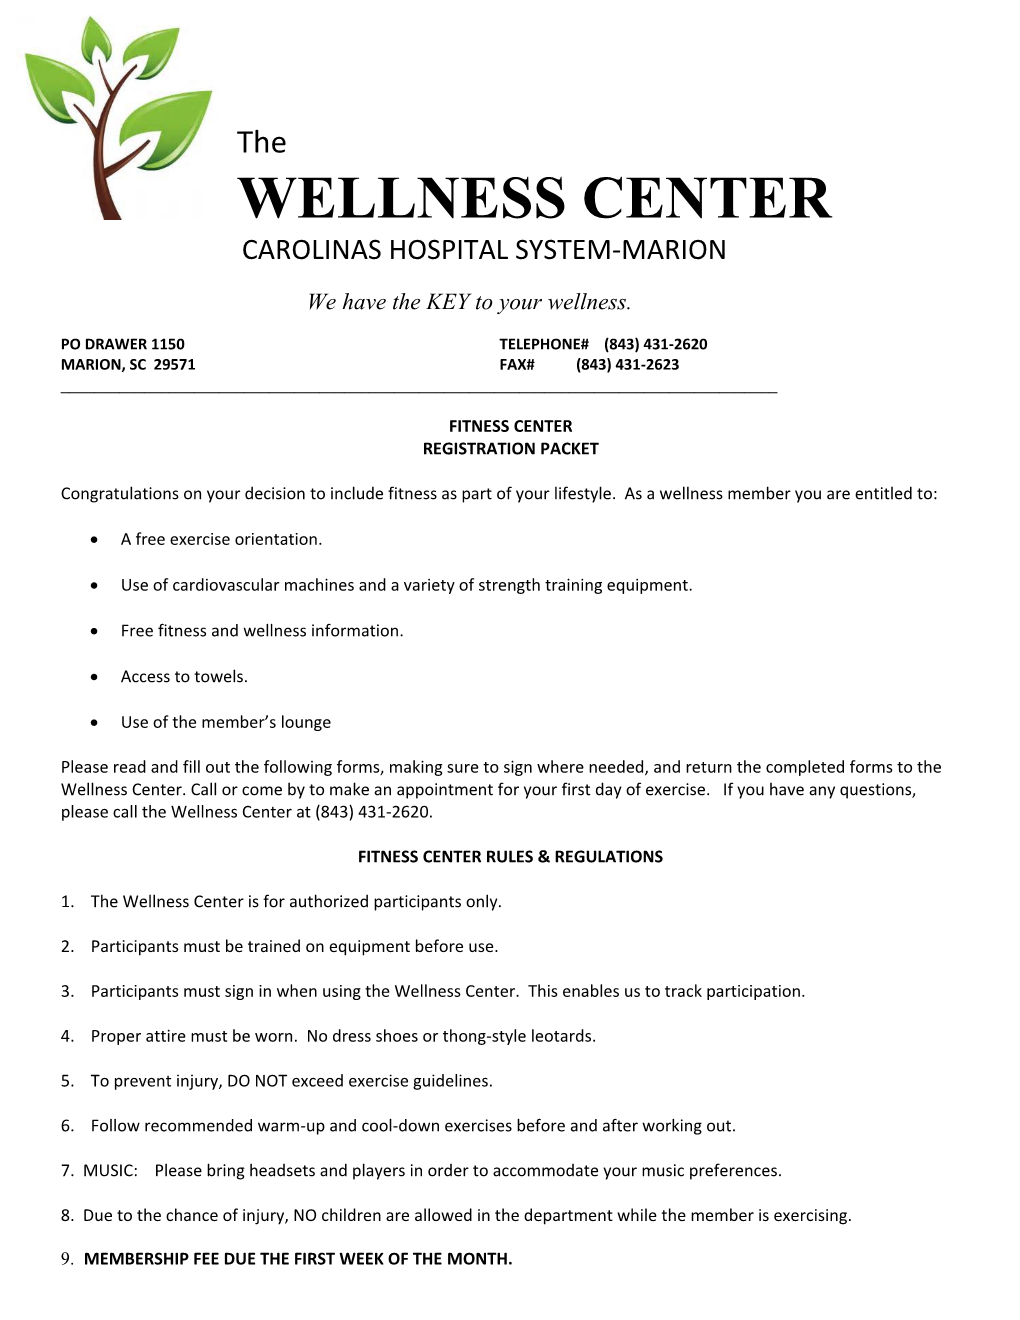 Marion County Medical Center Wellness Program